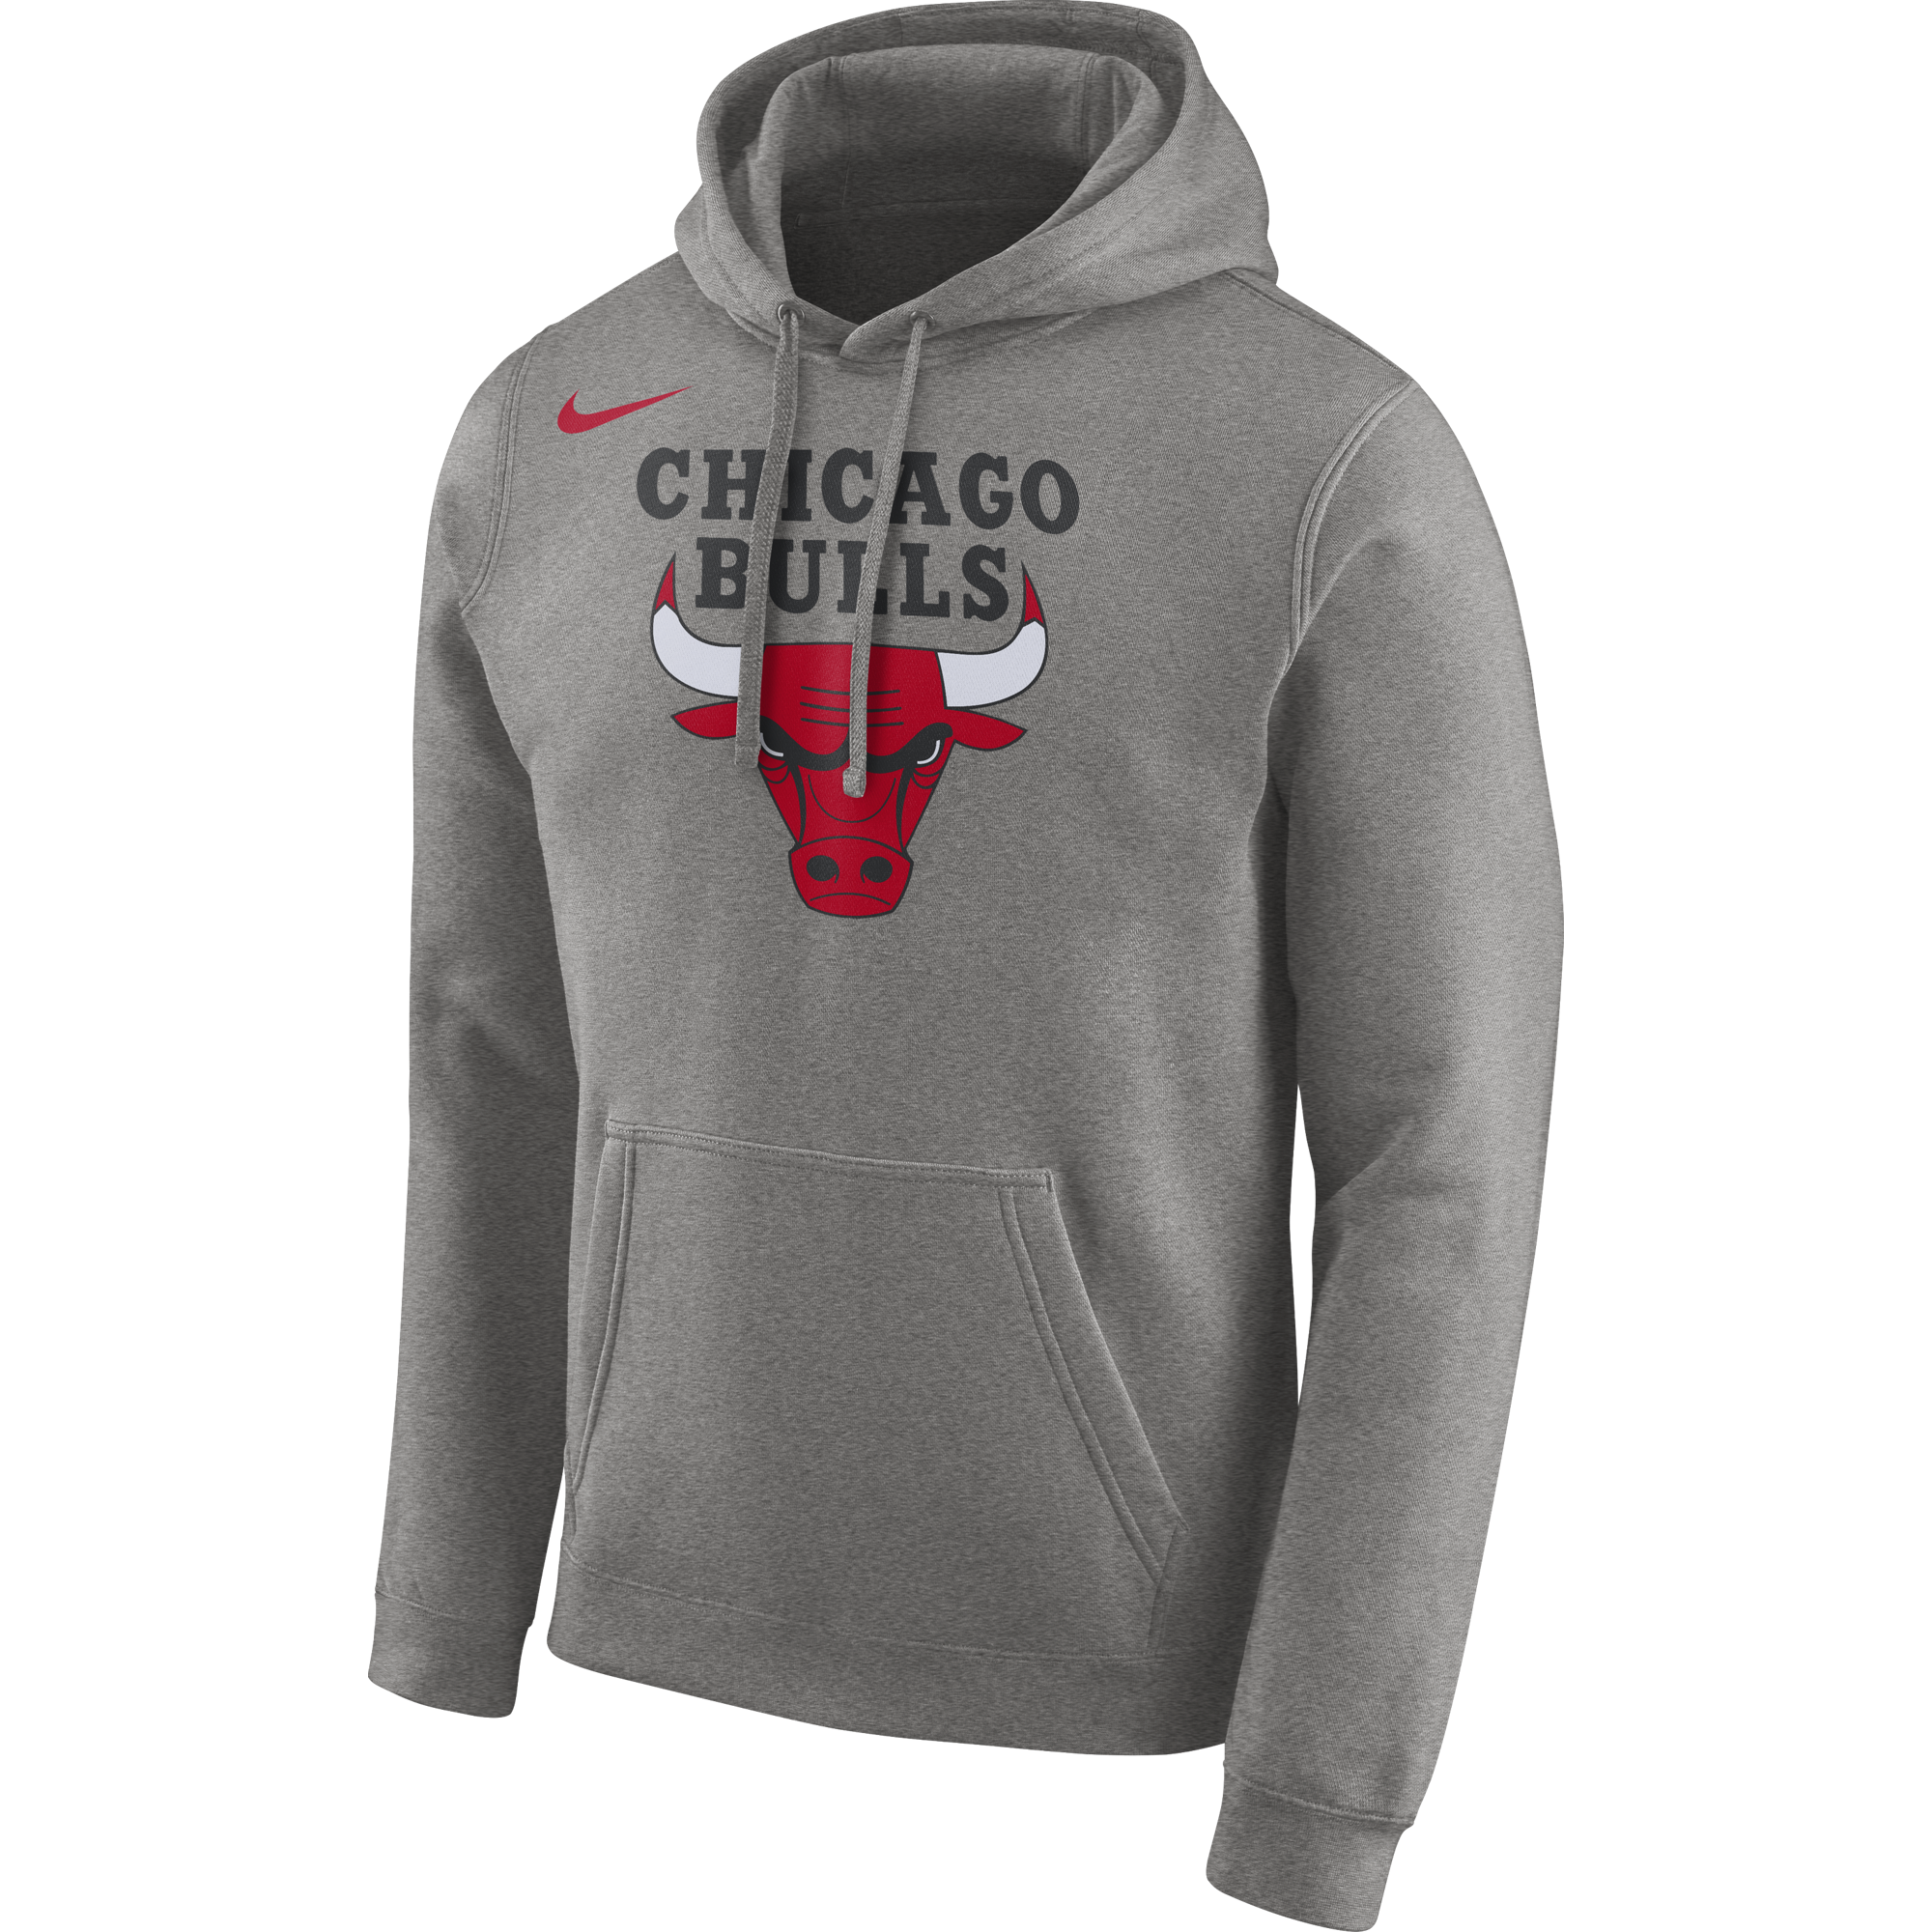 chicago bulls grey sweatshirt nike